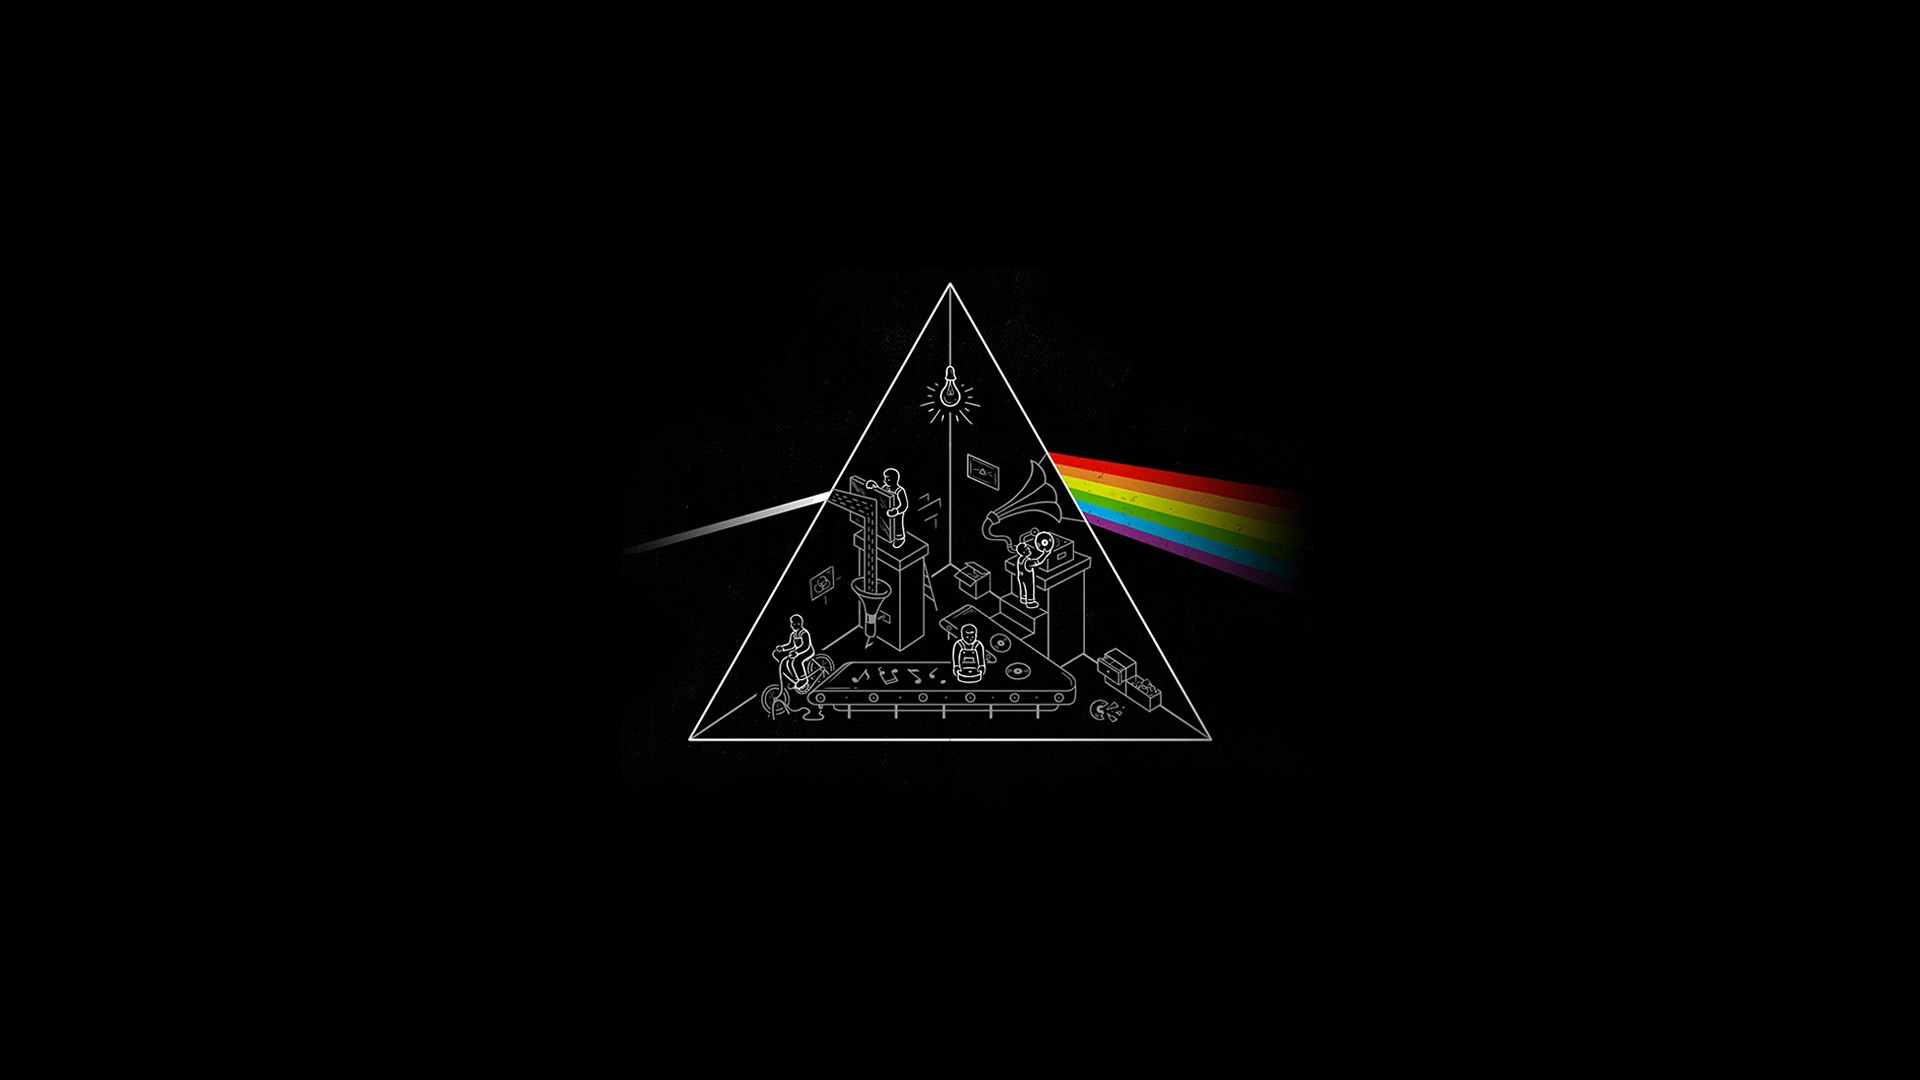 Pink Floyd Computer Wallpapers Desktop Backgrounds 1920x1080 ID